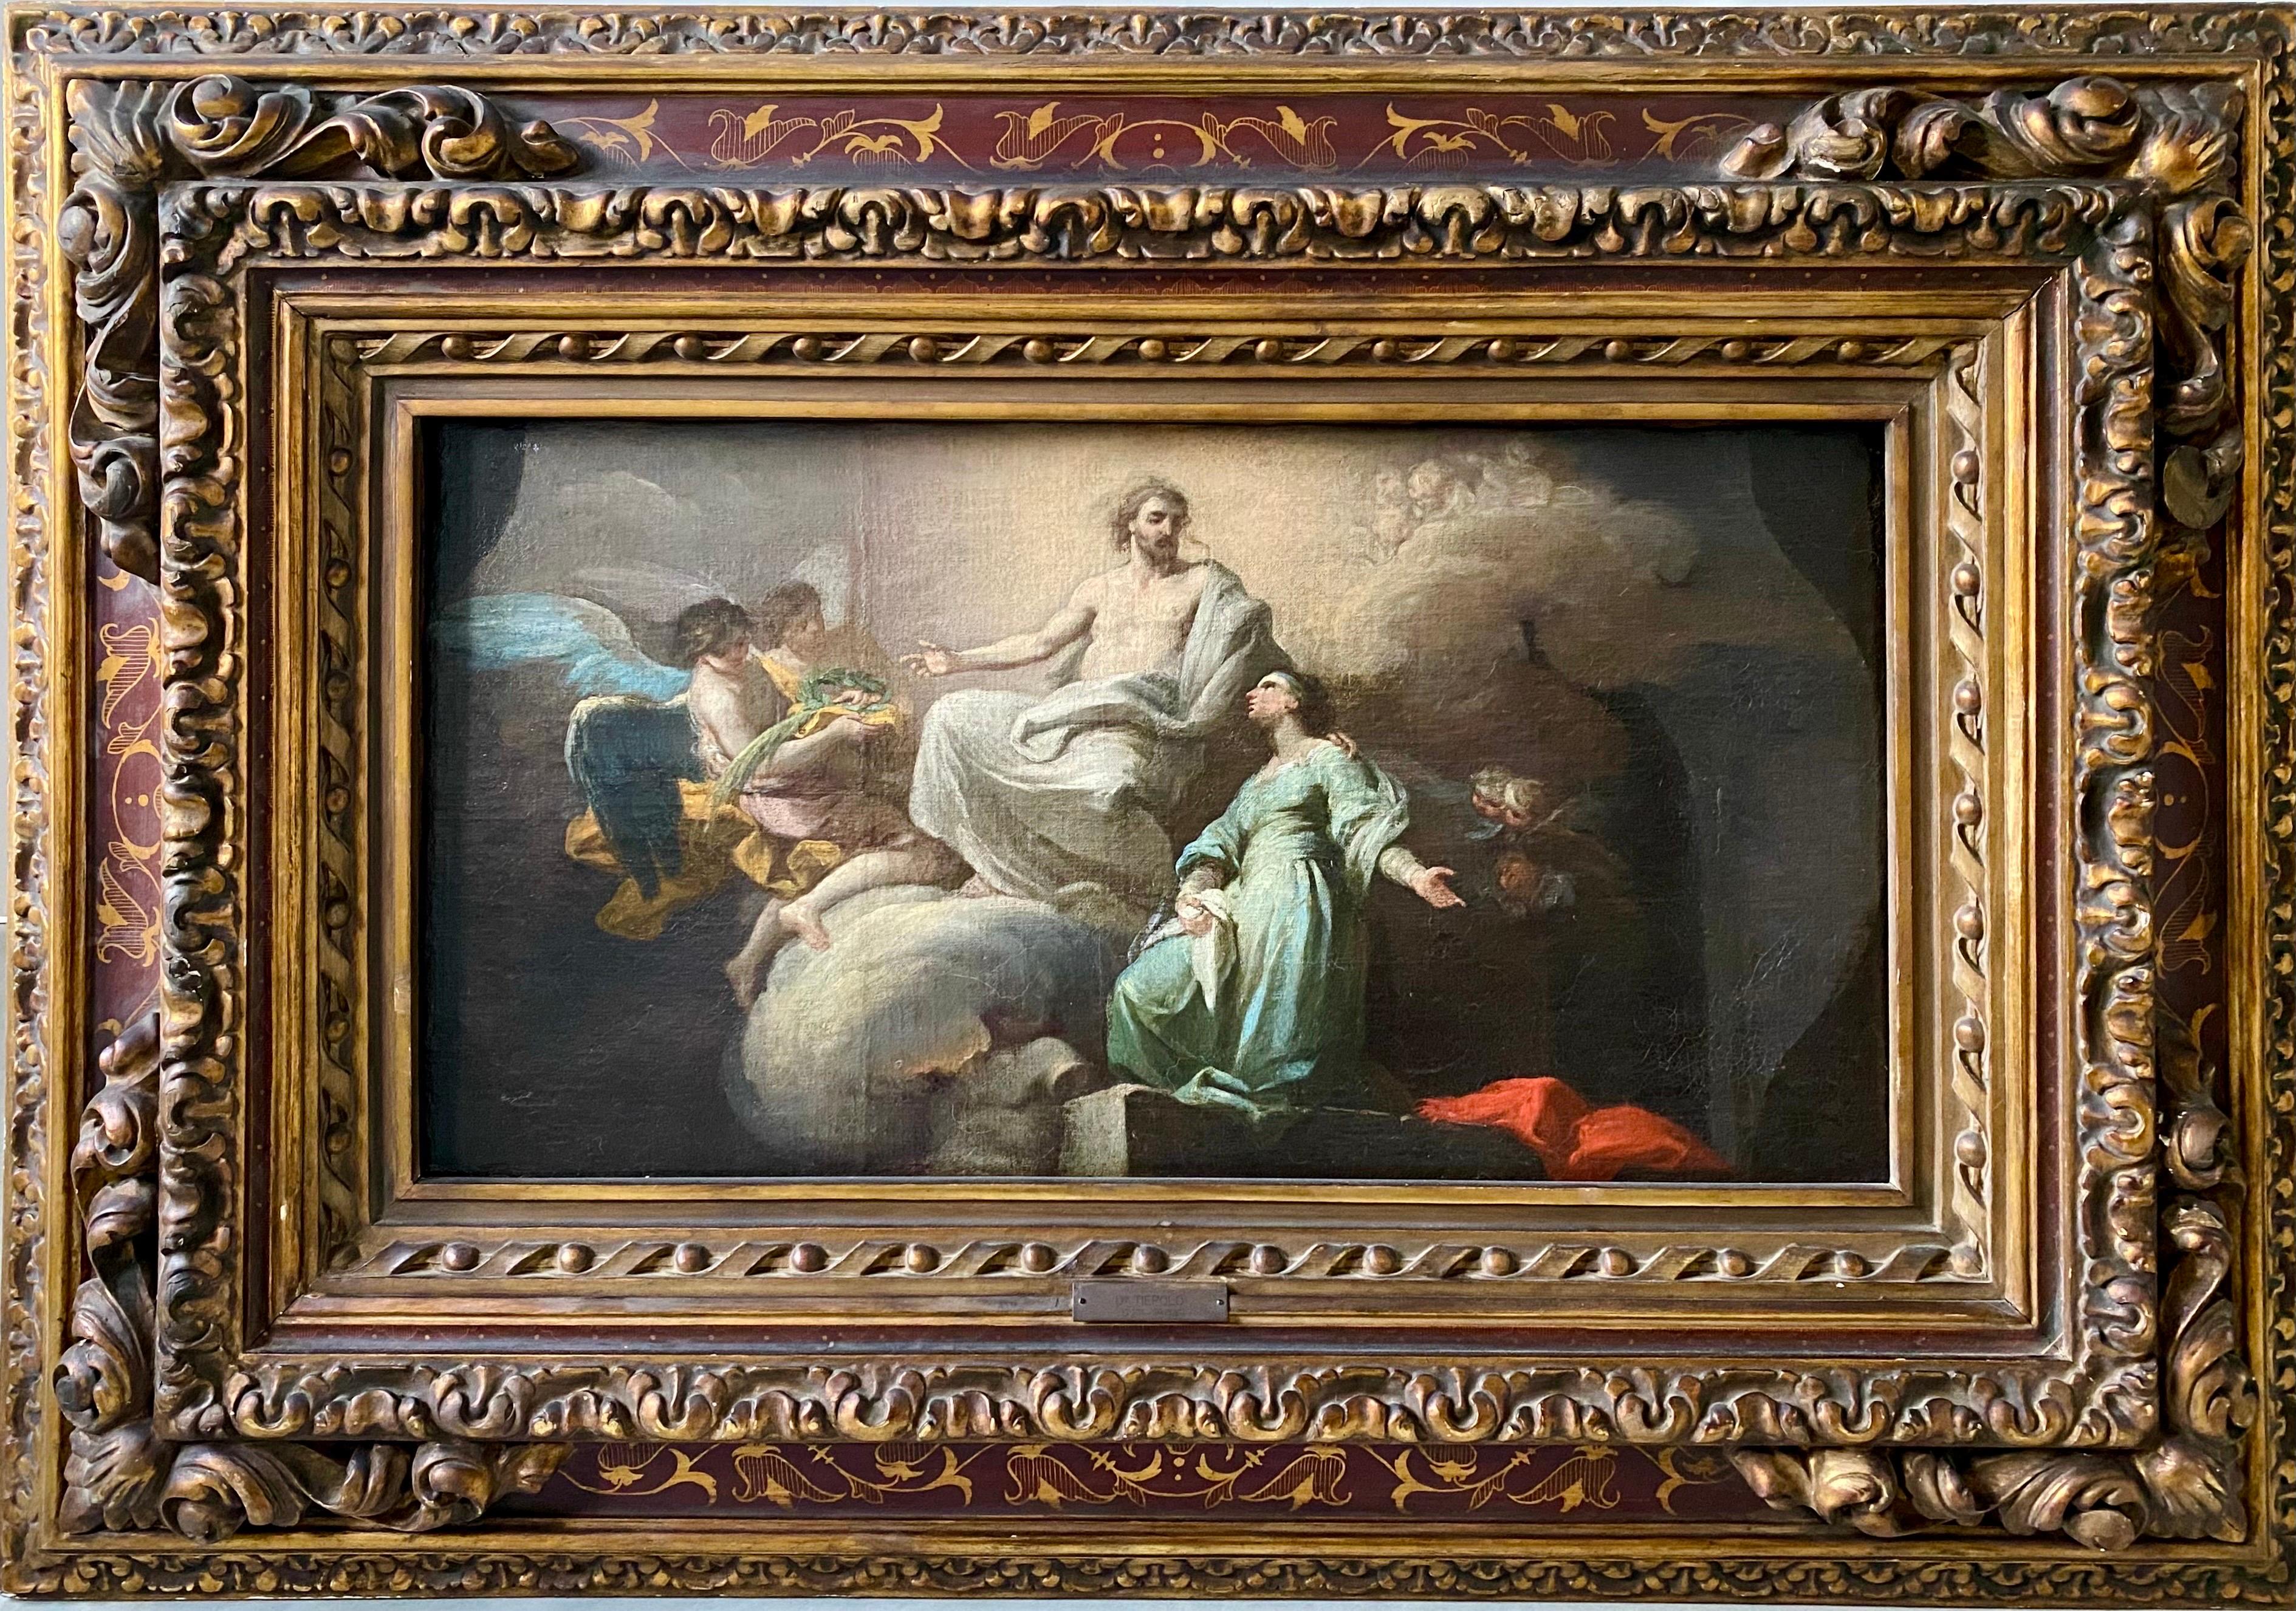 Francesco Solimena Figurative Painting - 18th century Italian painting - The coronation of Saint Agnes - Solimena